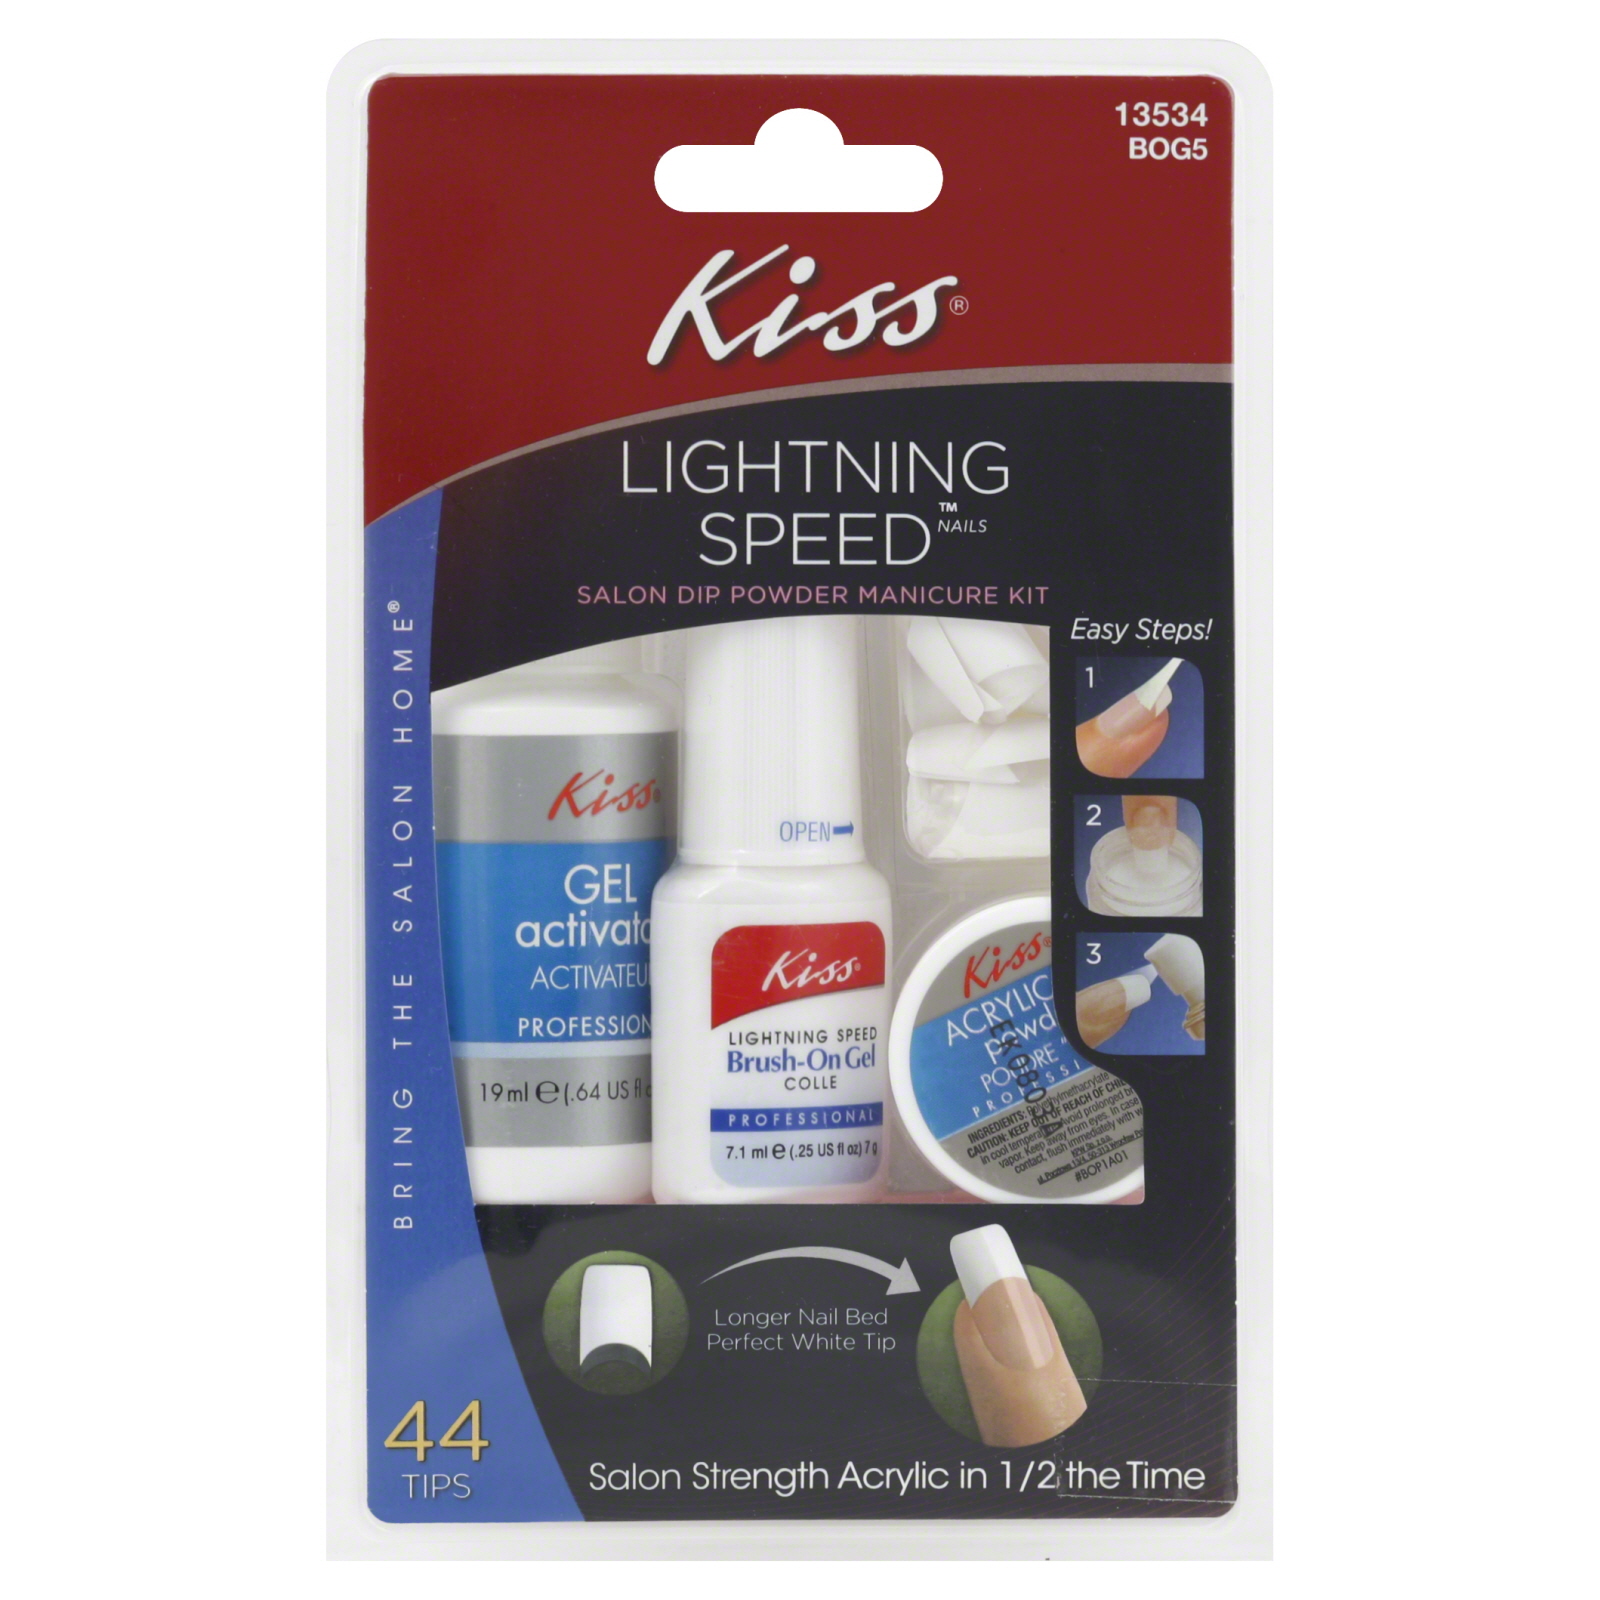 Kiss Lightning Speed Manicure Kit, Salon Dip Powder, 1 kit